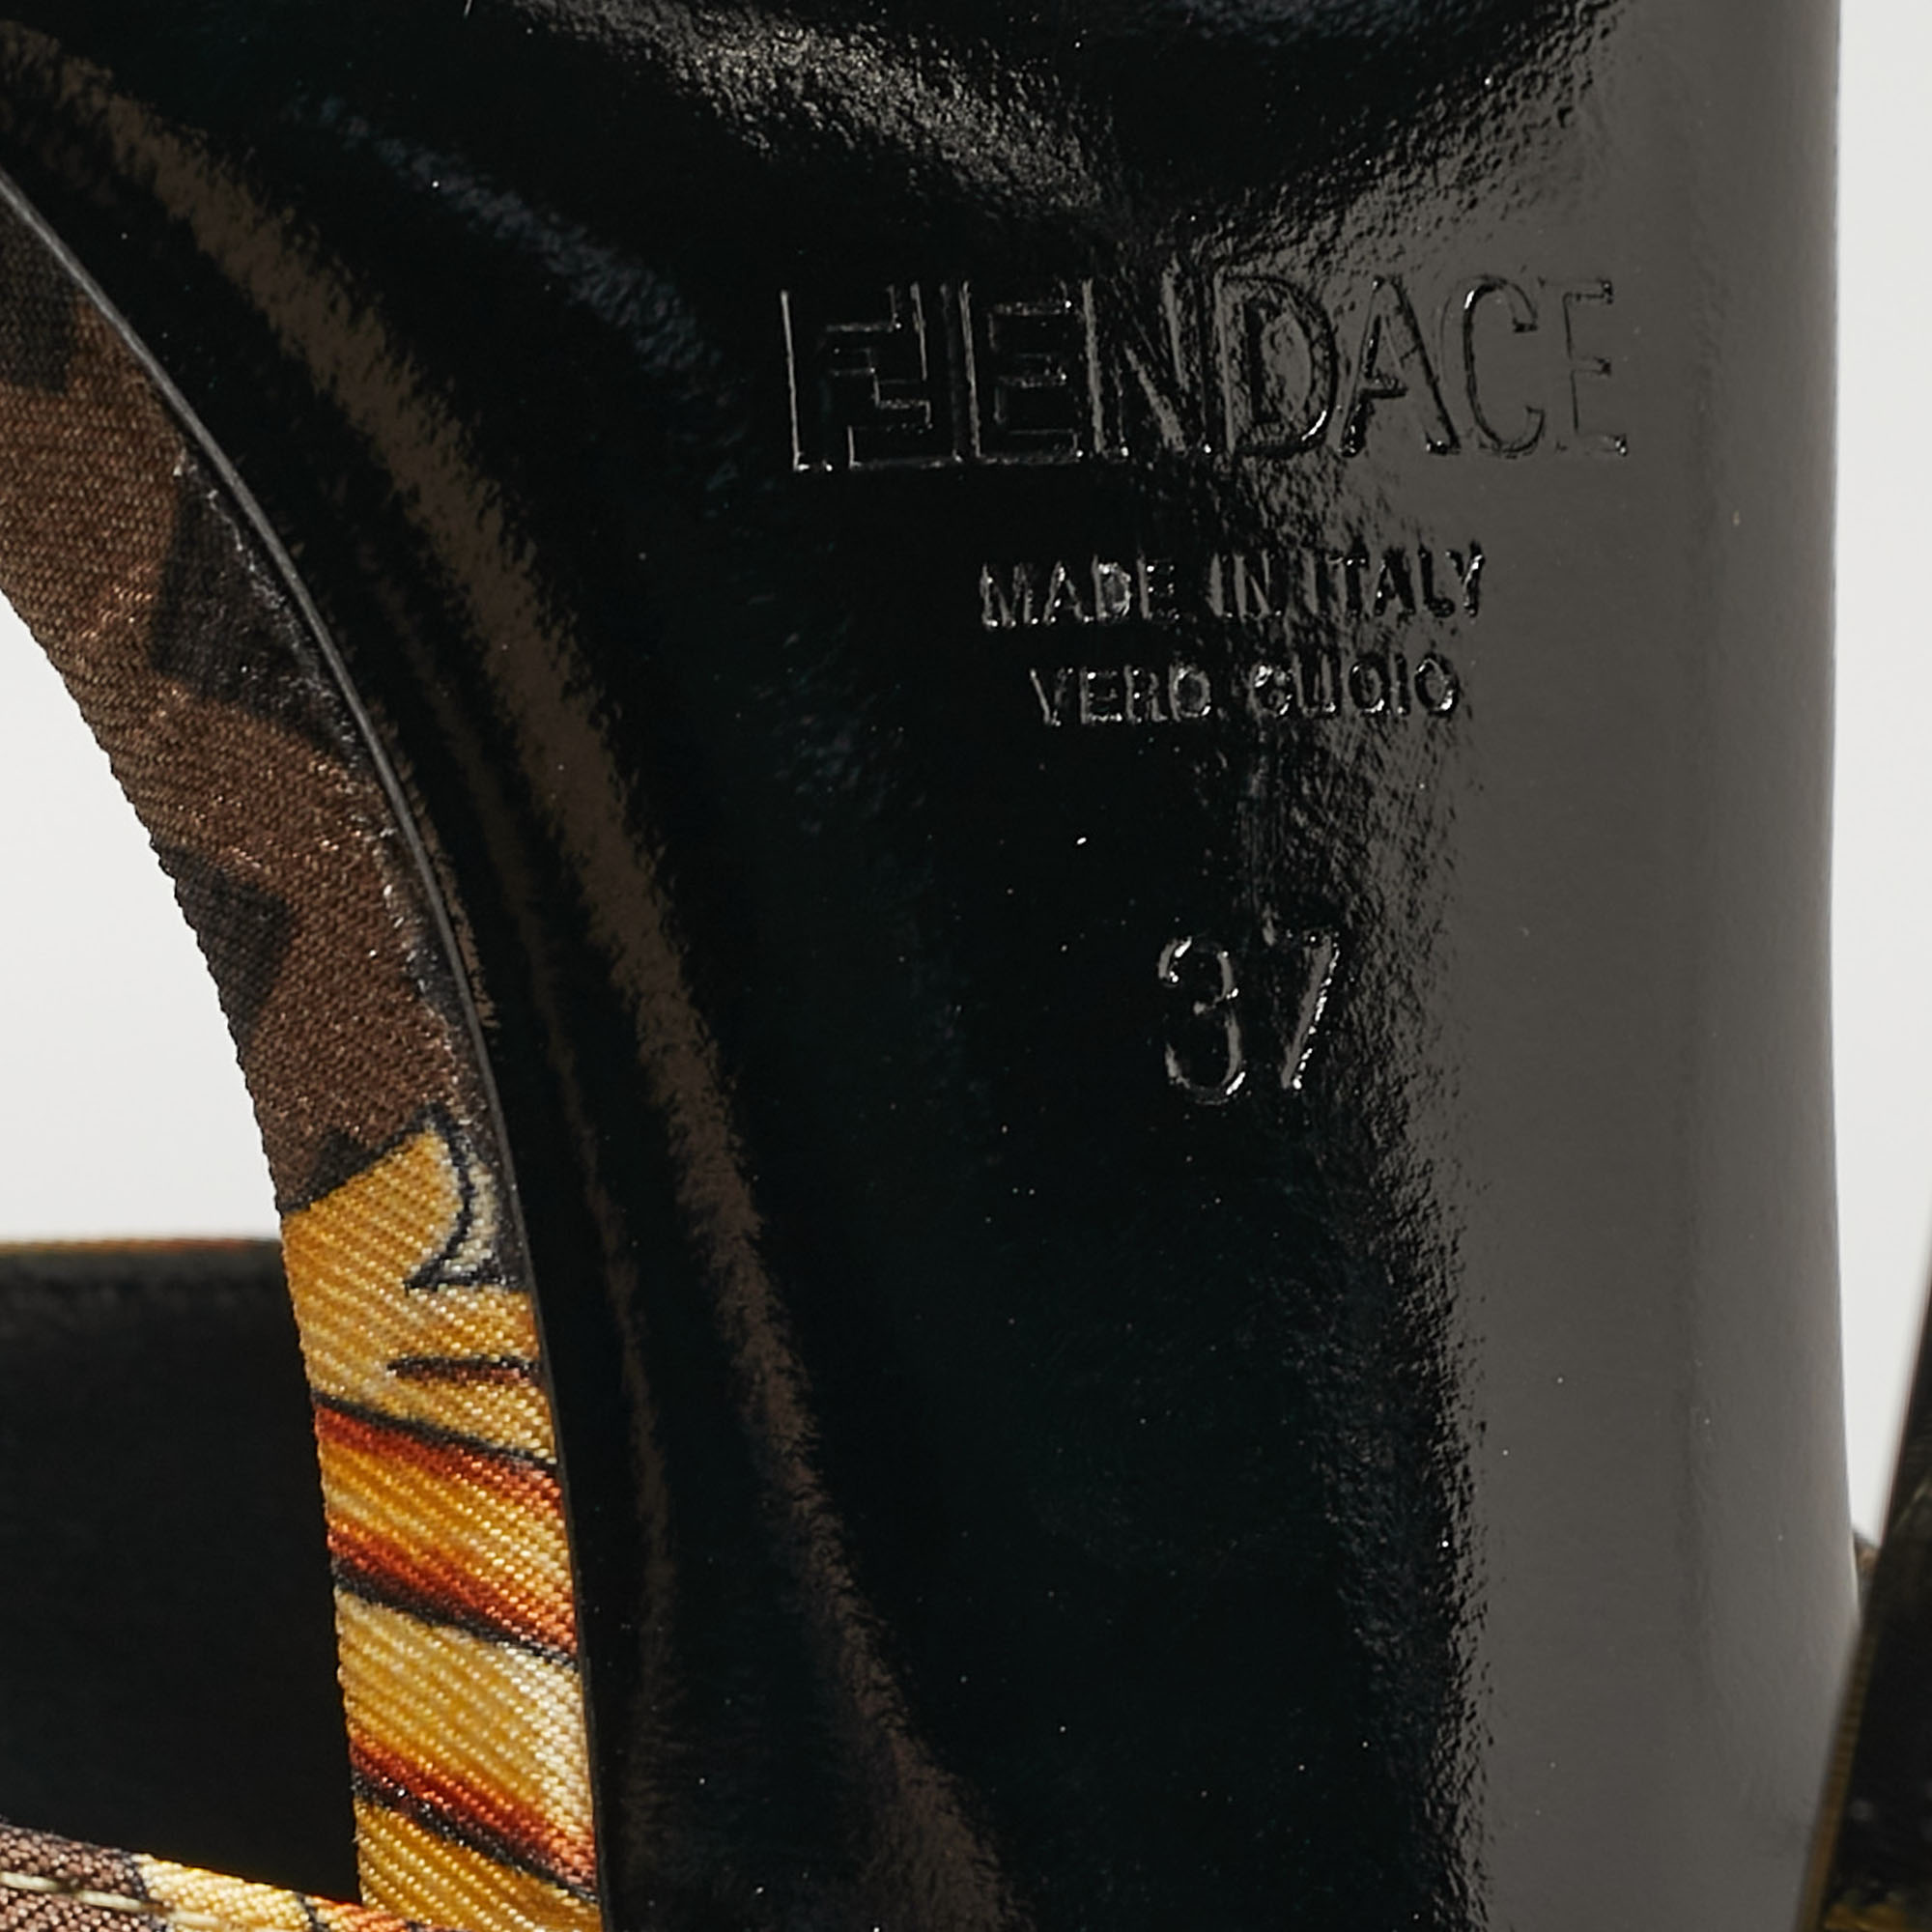 Fendi X Versace Black/Yellow Zucca Canvas Medusa Logo Slide Sandals Size 37